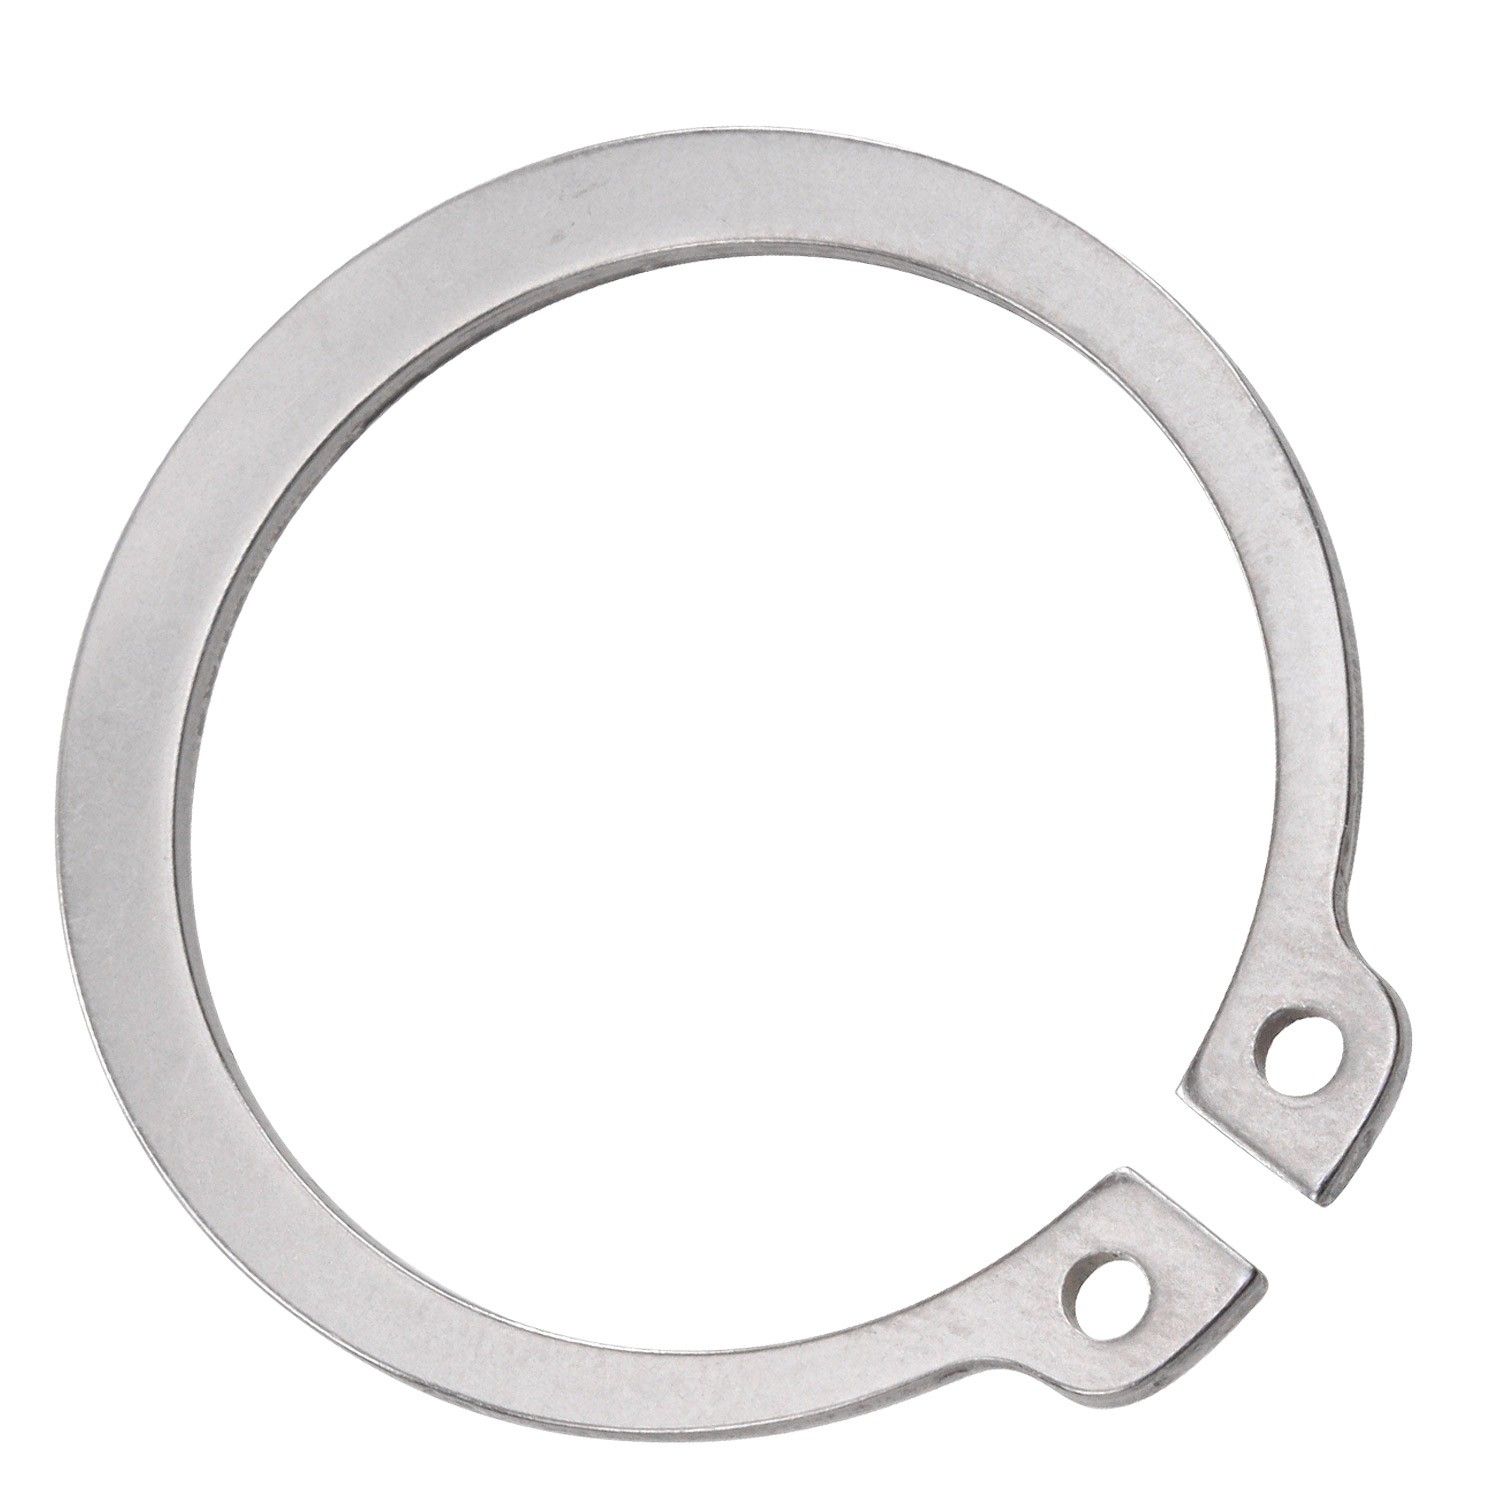 Кольцо стопорное наружное 34х1,5 DIN 471, нержавеющая сталь 1.4122 (А2) - фото